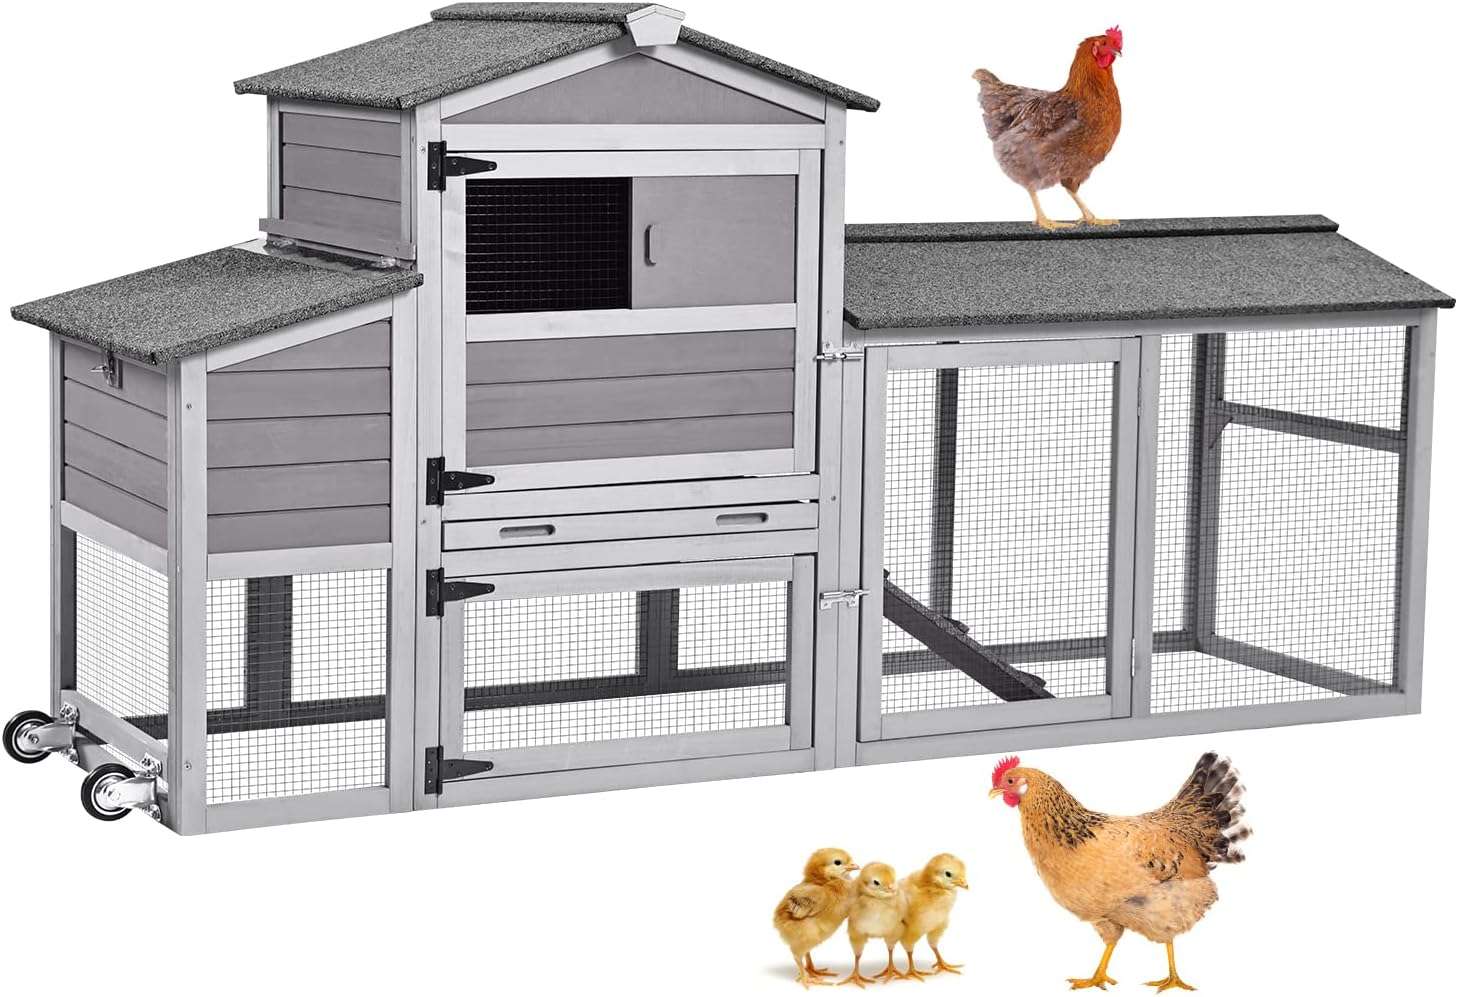 Chicken Coop Mobile